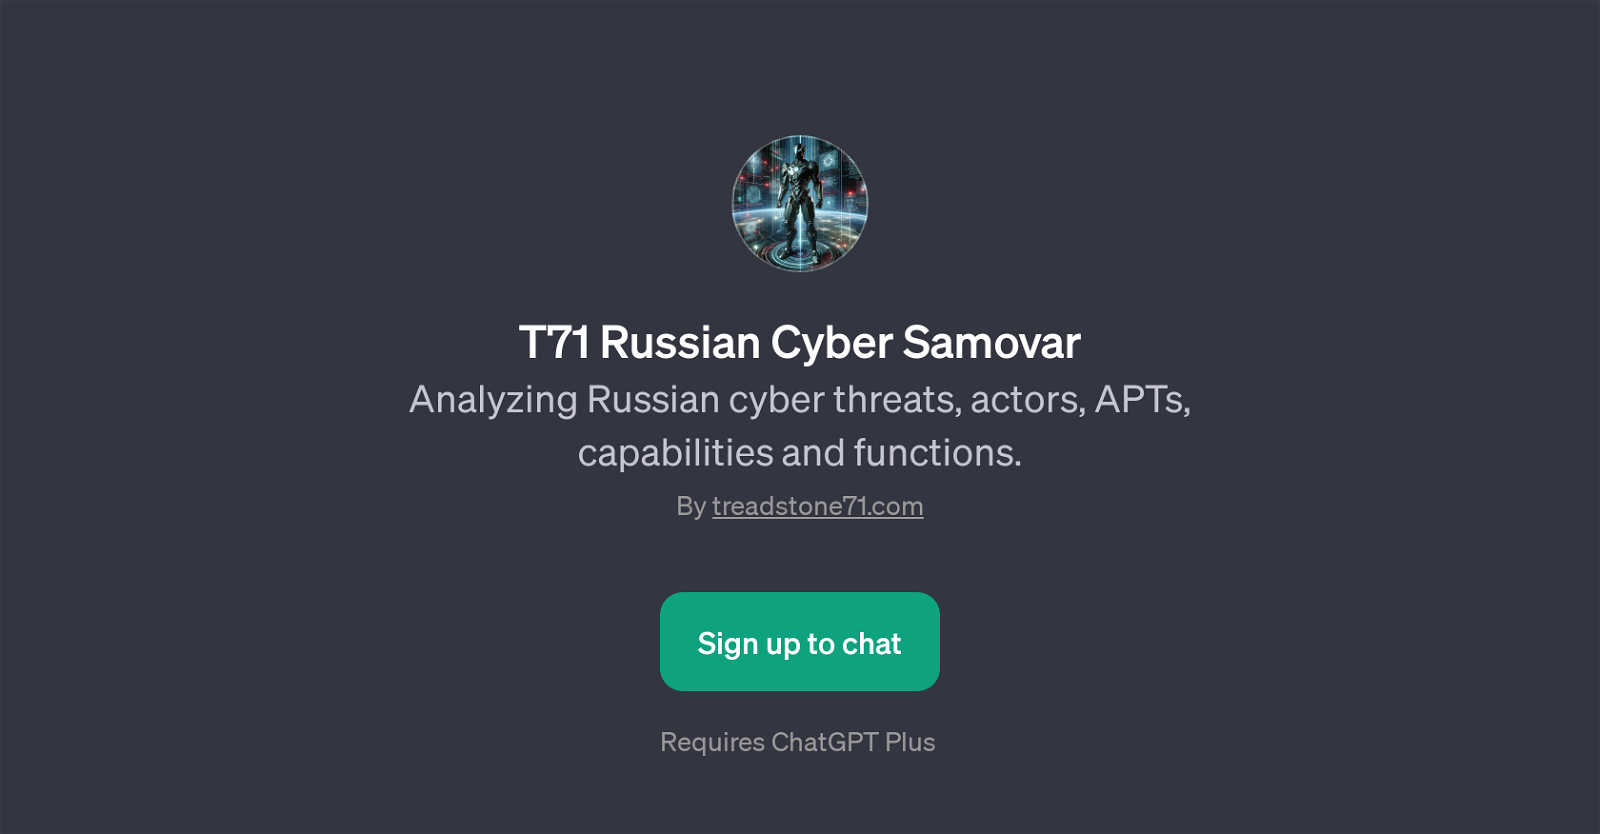 T71 Russian Cyber Samovar website